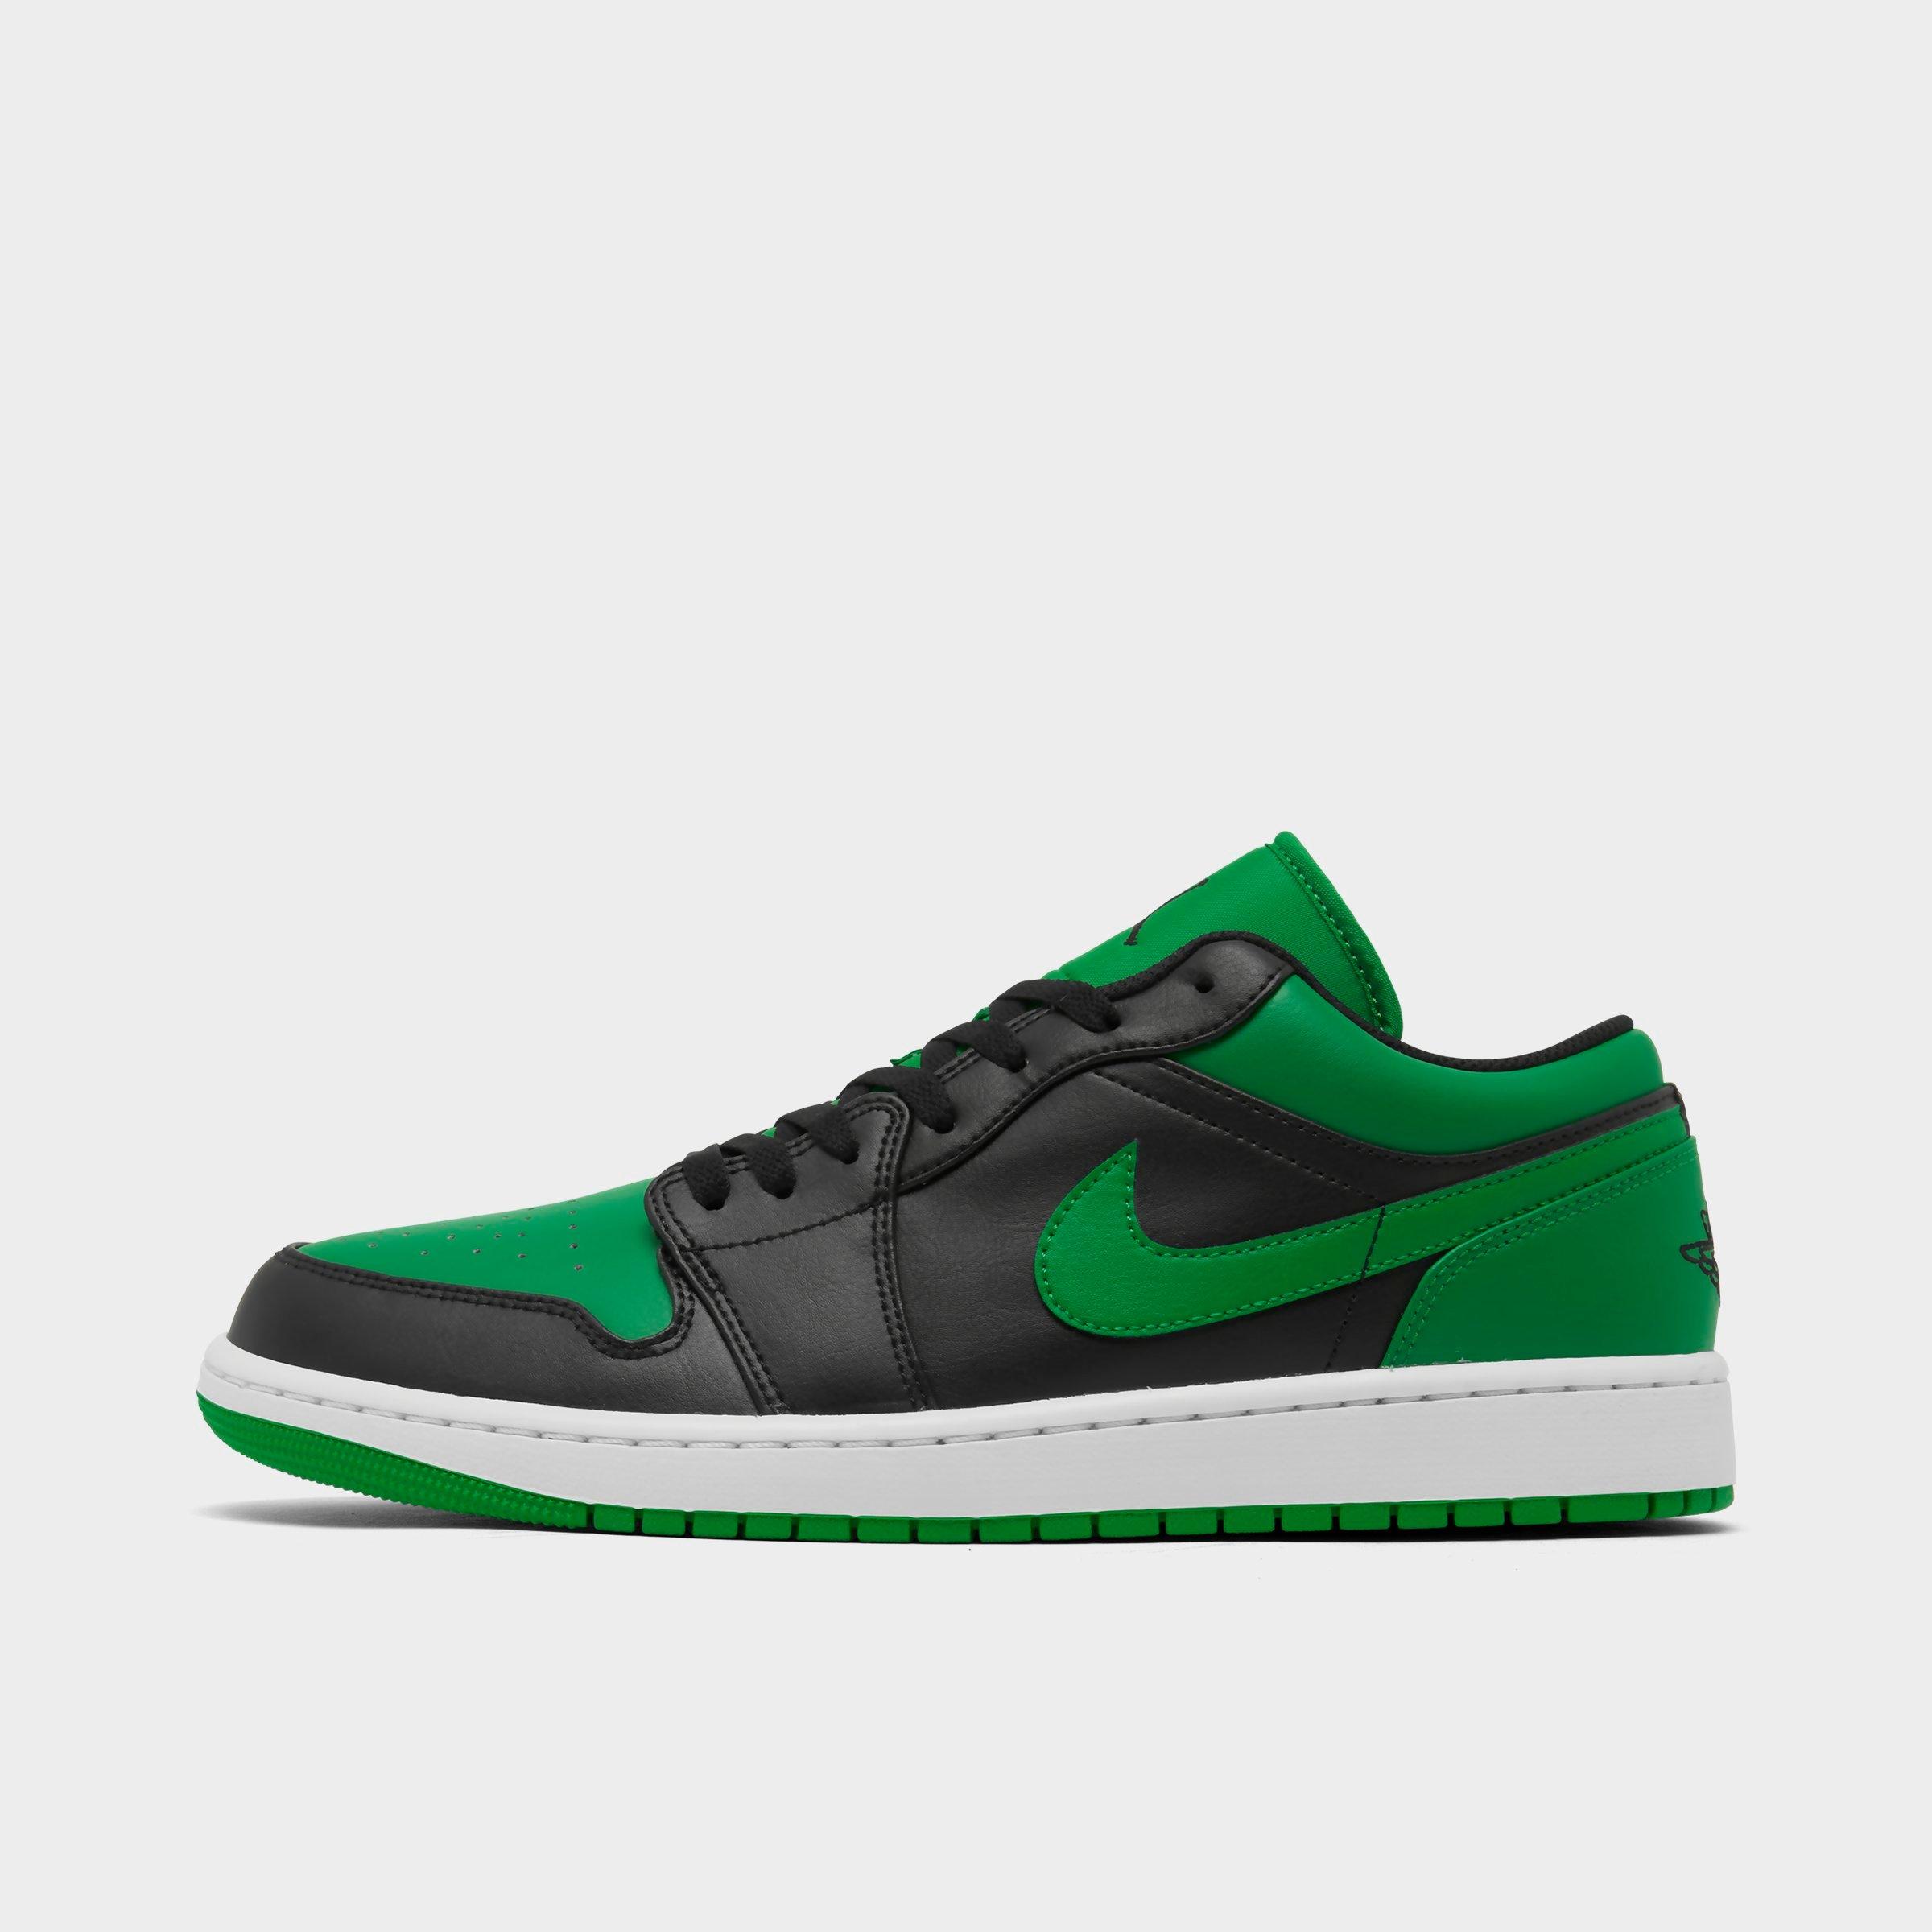 jordan shoes green